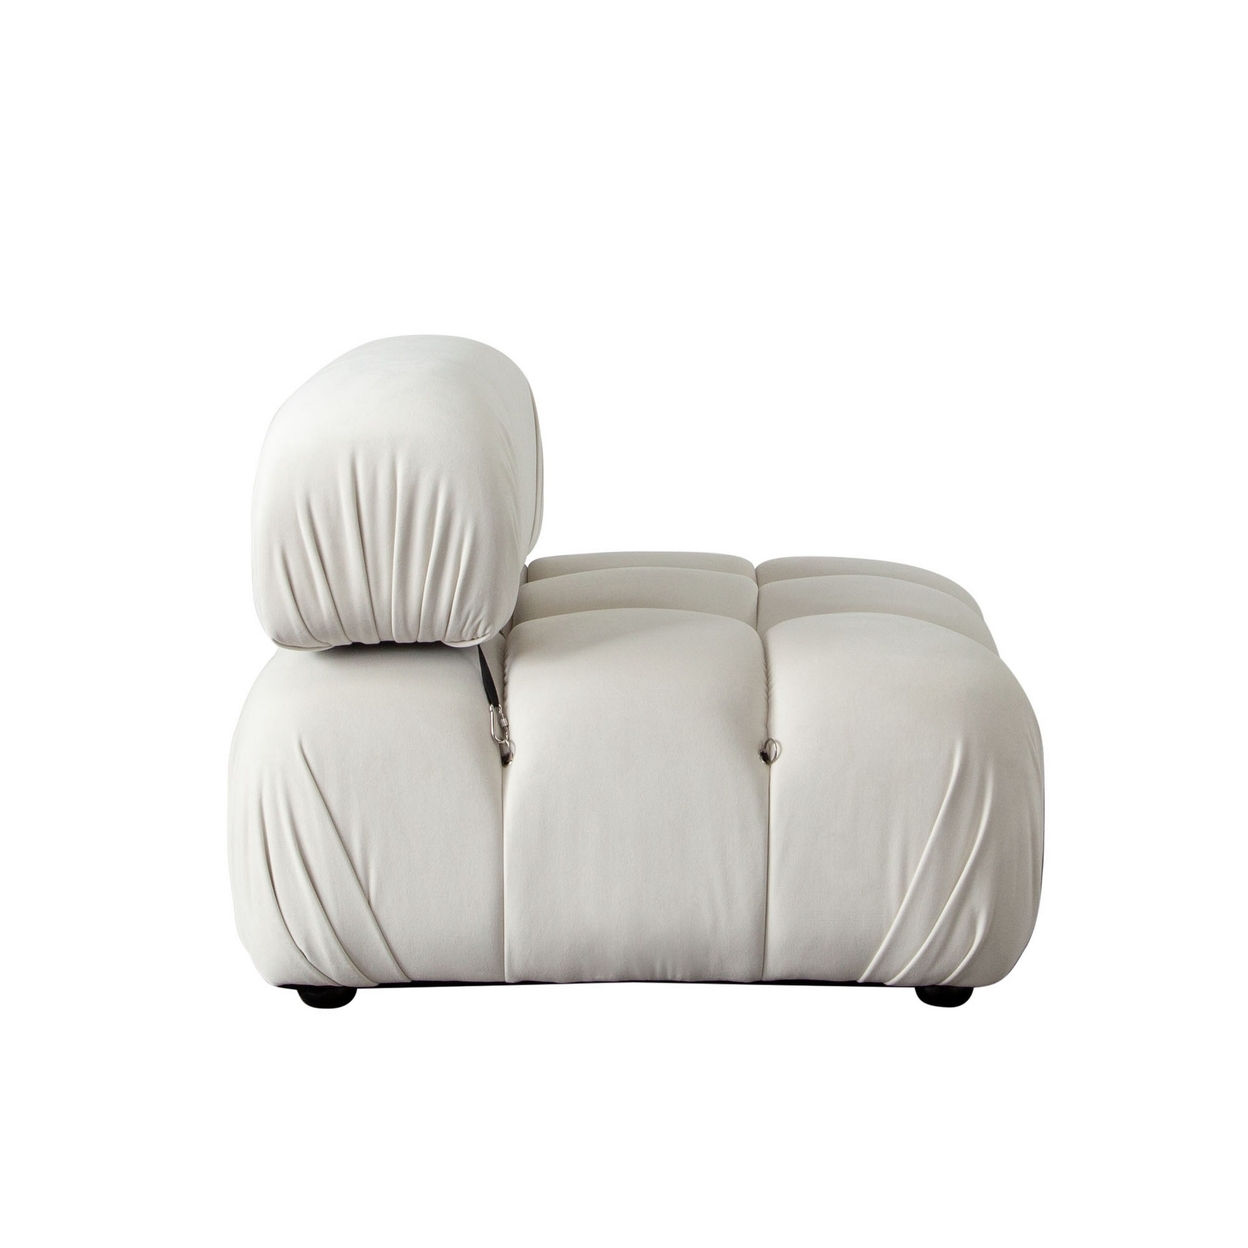 Nod 37 Inch Armless Chair, Cushioned Seating, Square Tufting, White, Black- Saltoro Sherpi